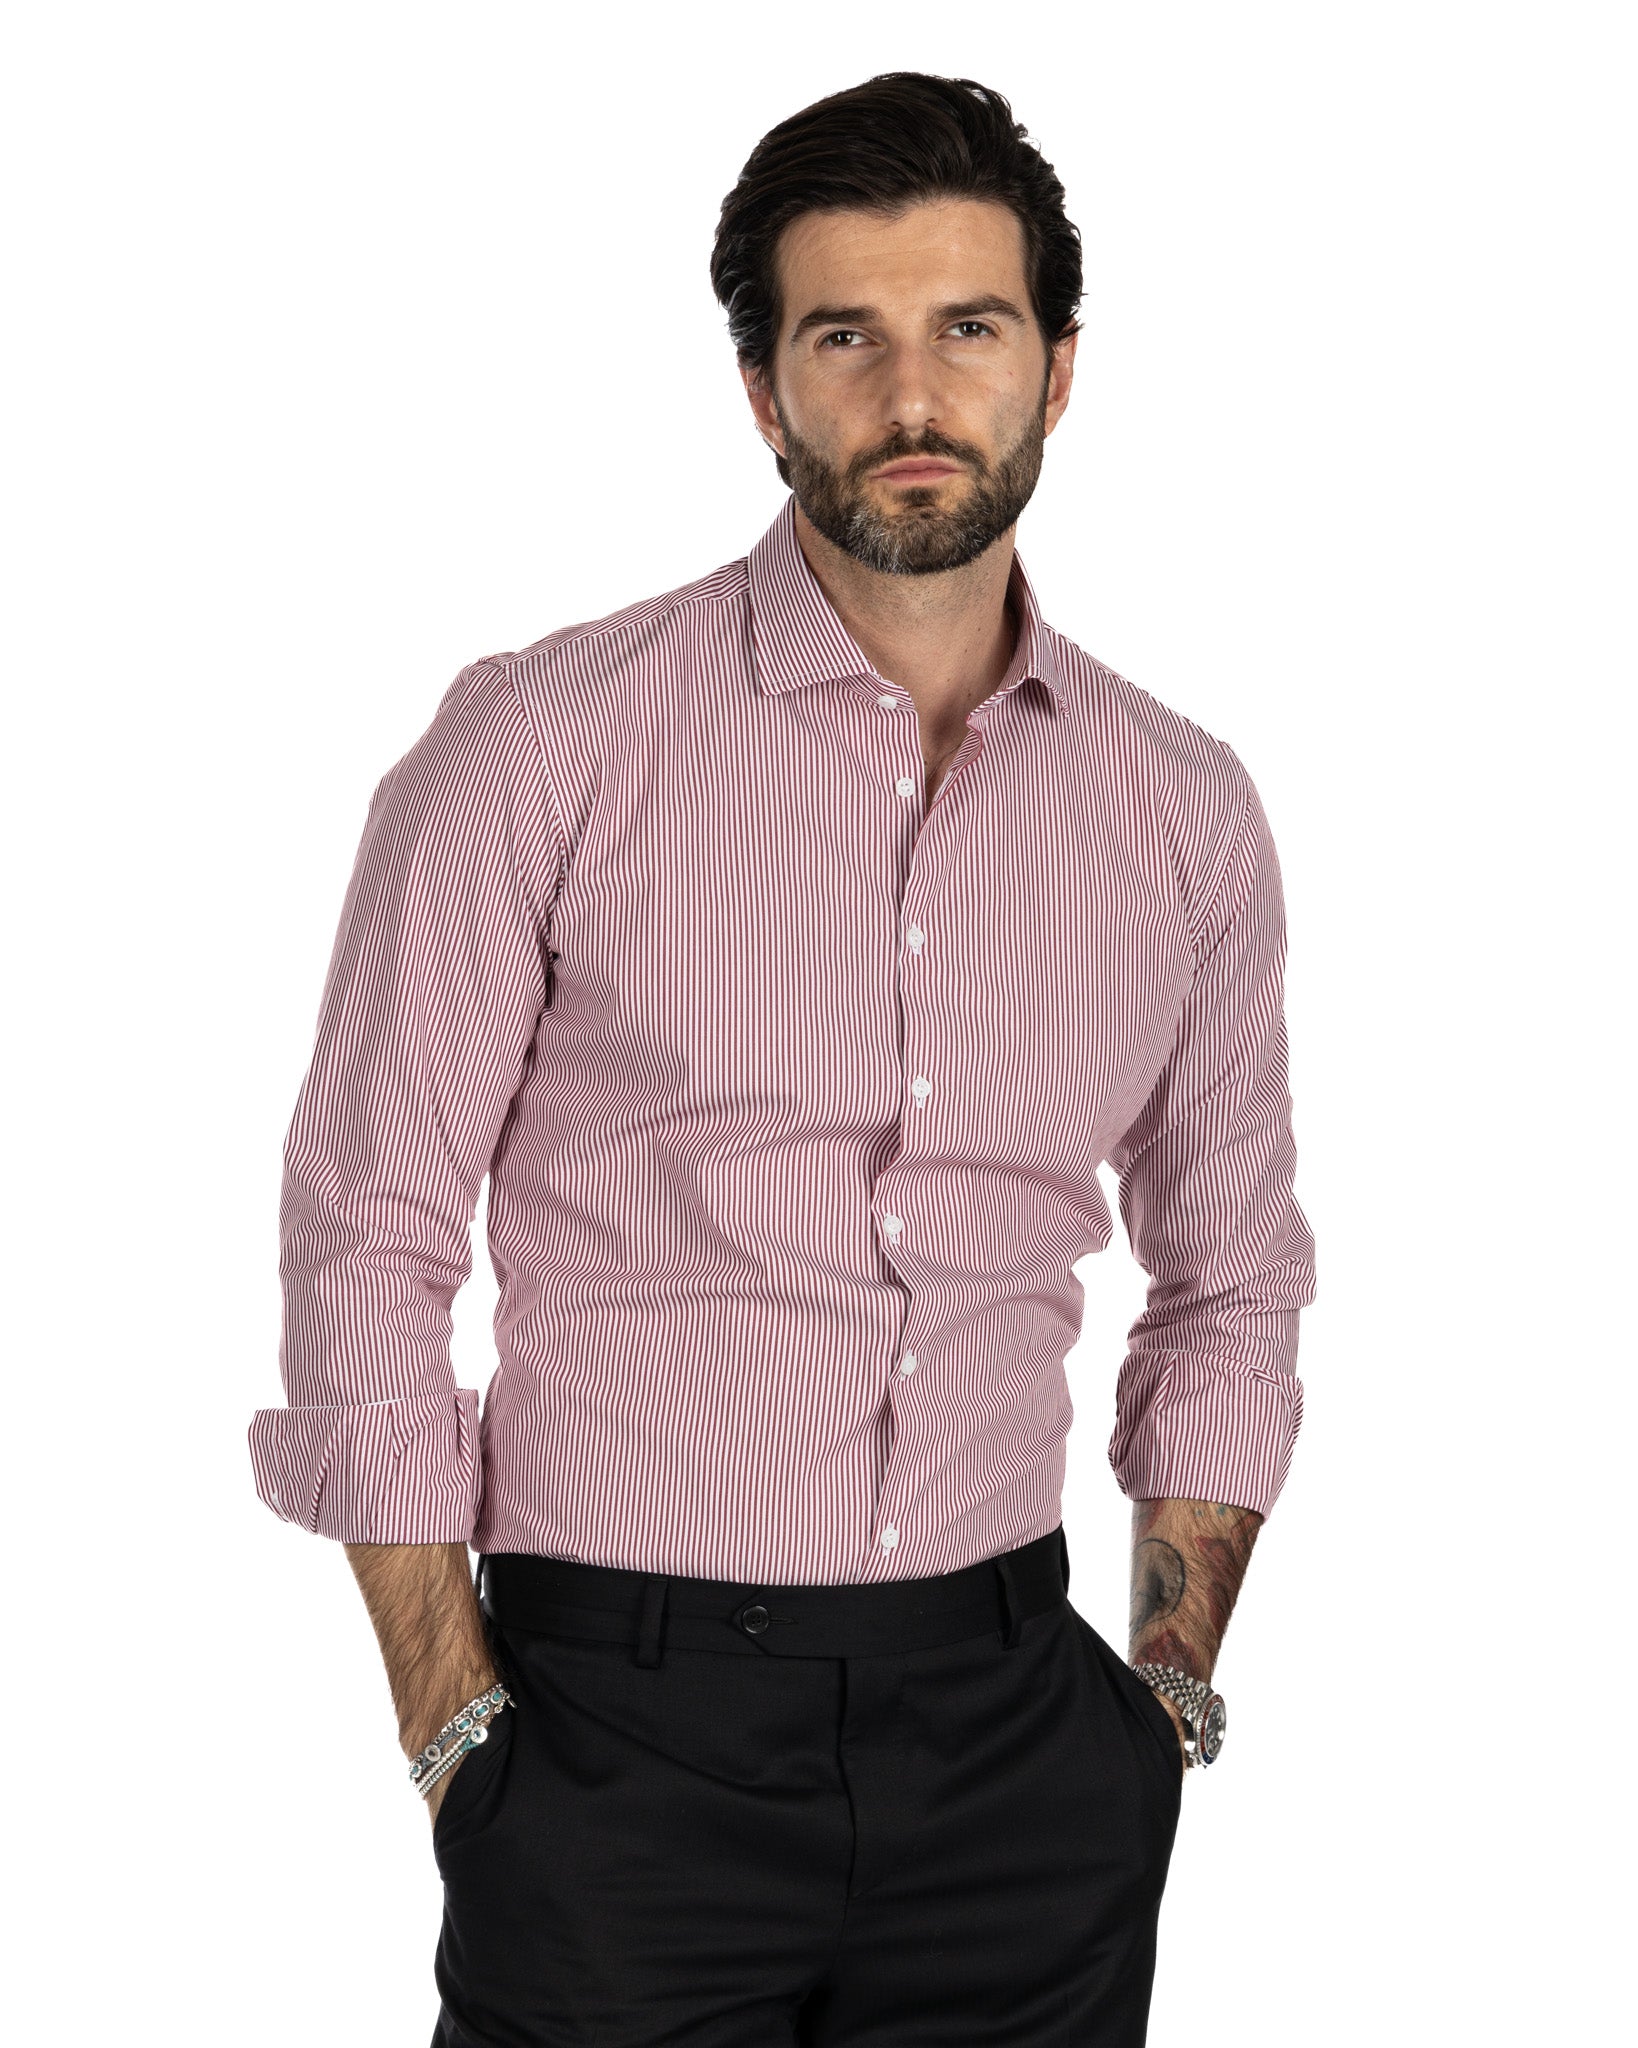 Shirt - slim fit narrow stripe burgundy